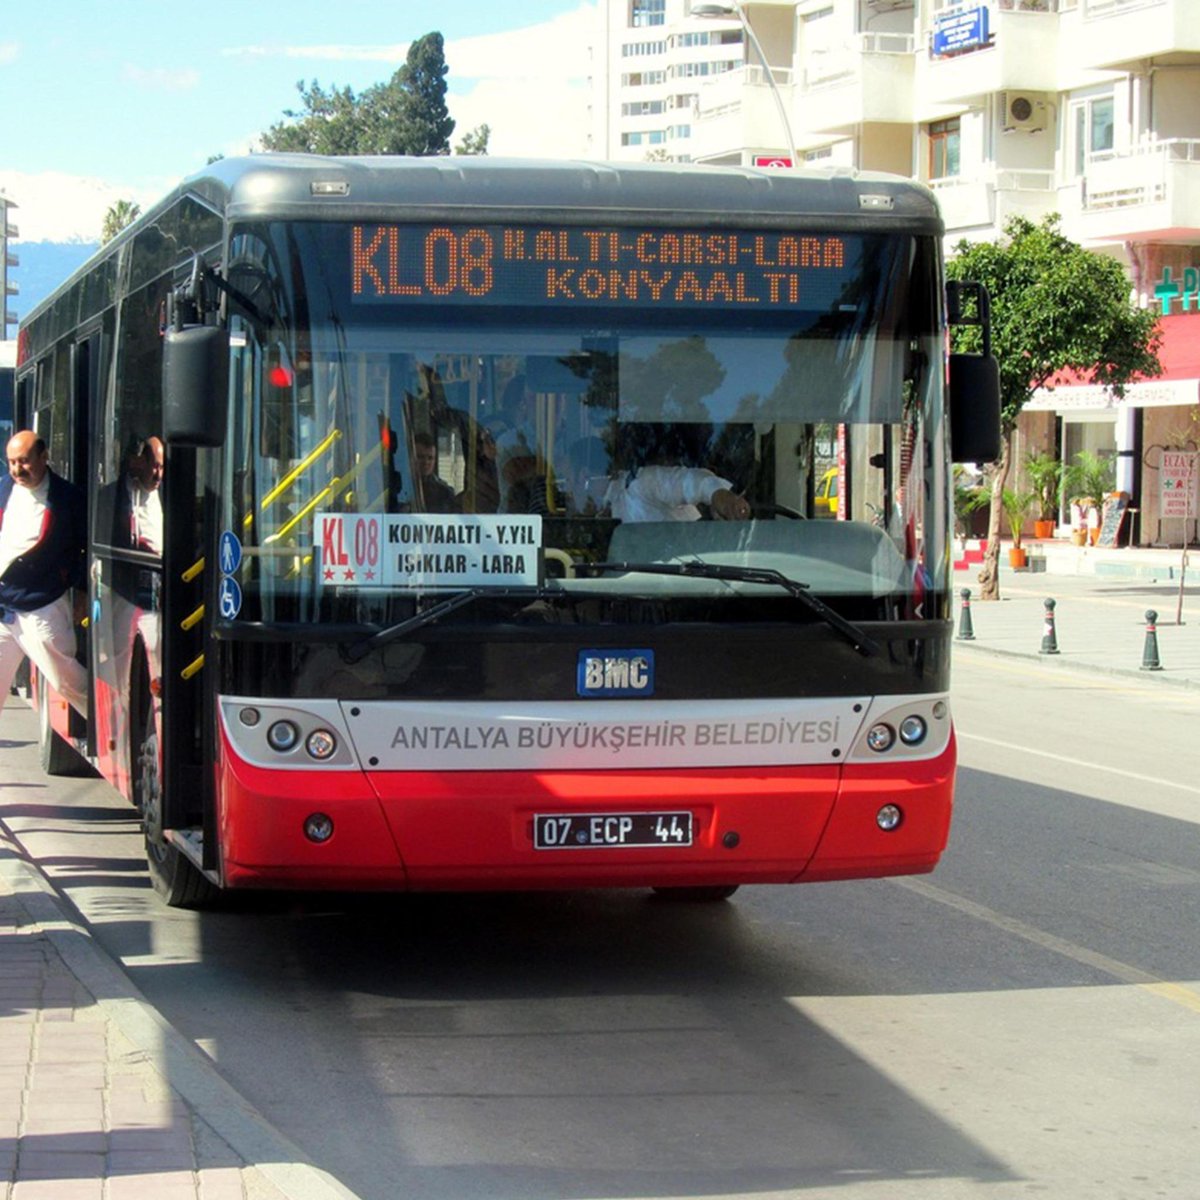 developed public transport system